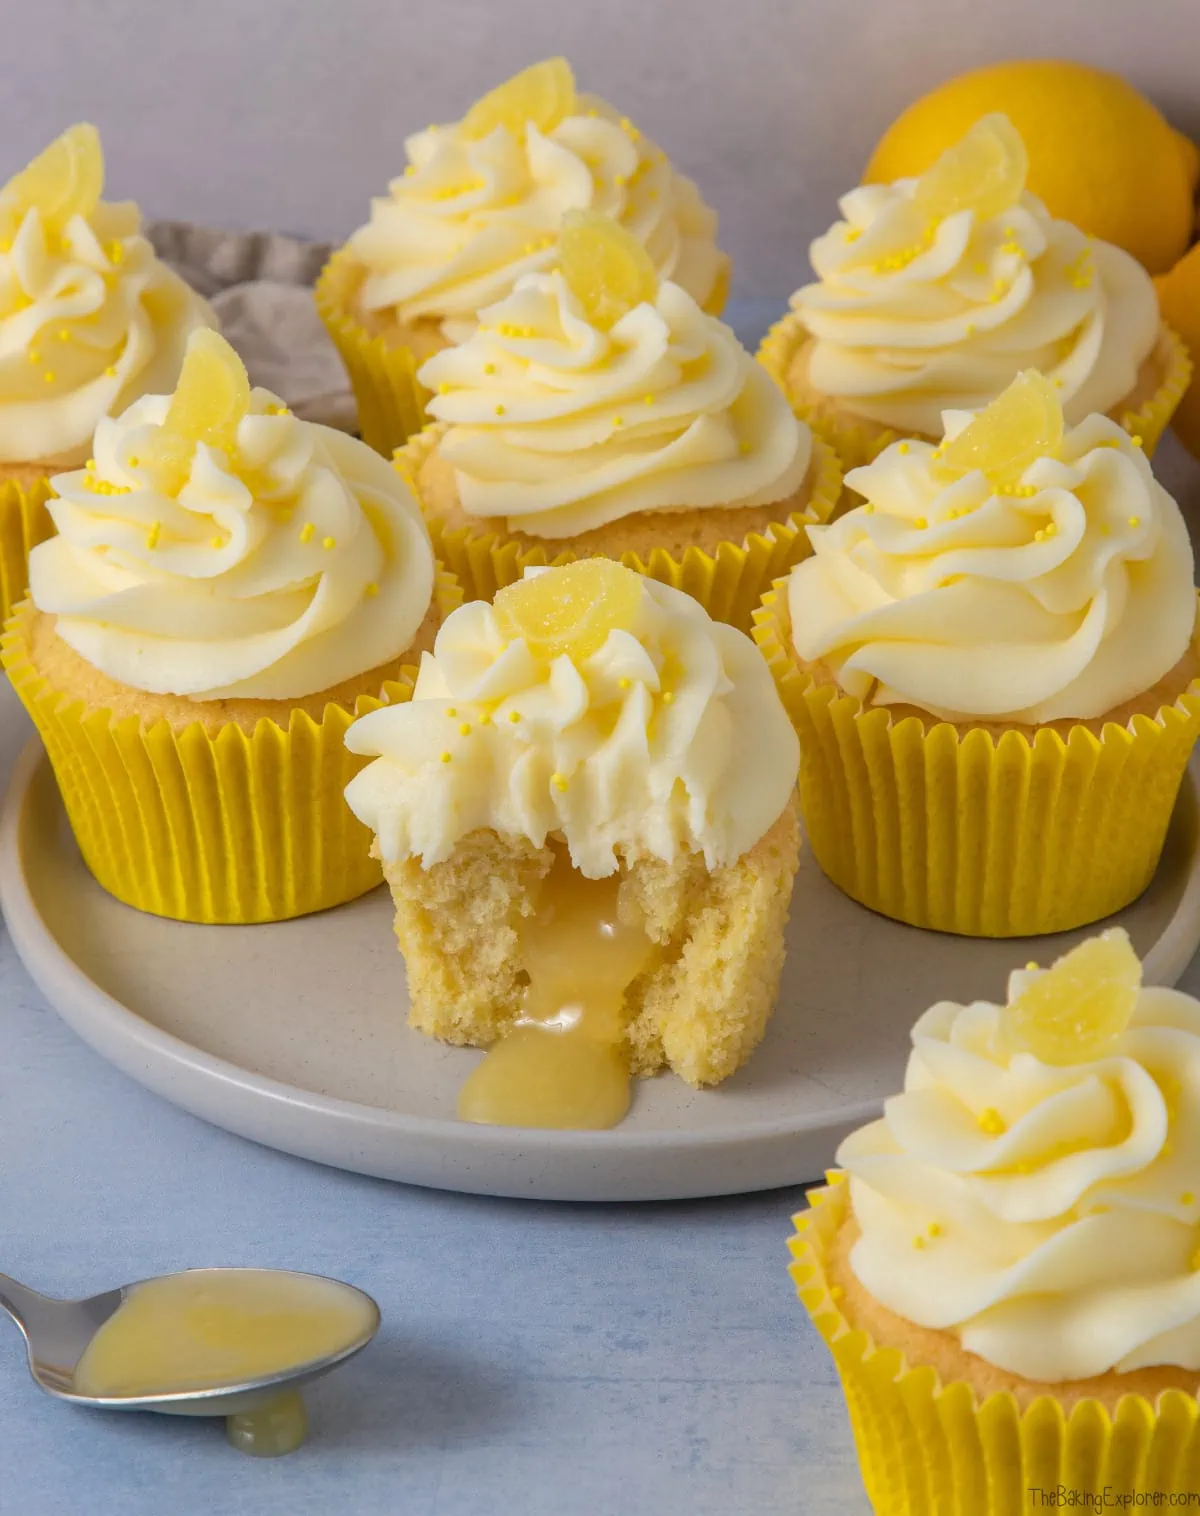 Lemon Cupcakes with Lemon Curd Filling